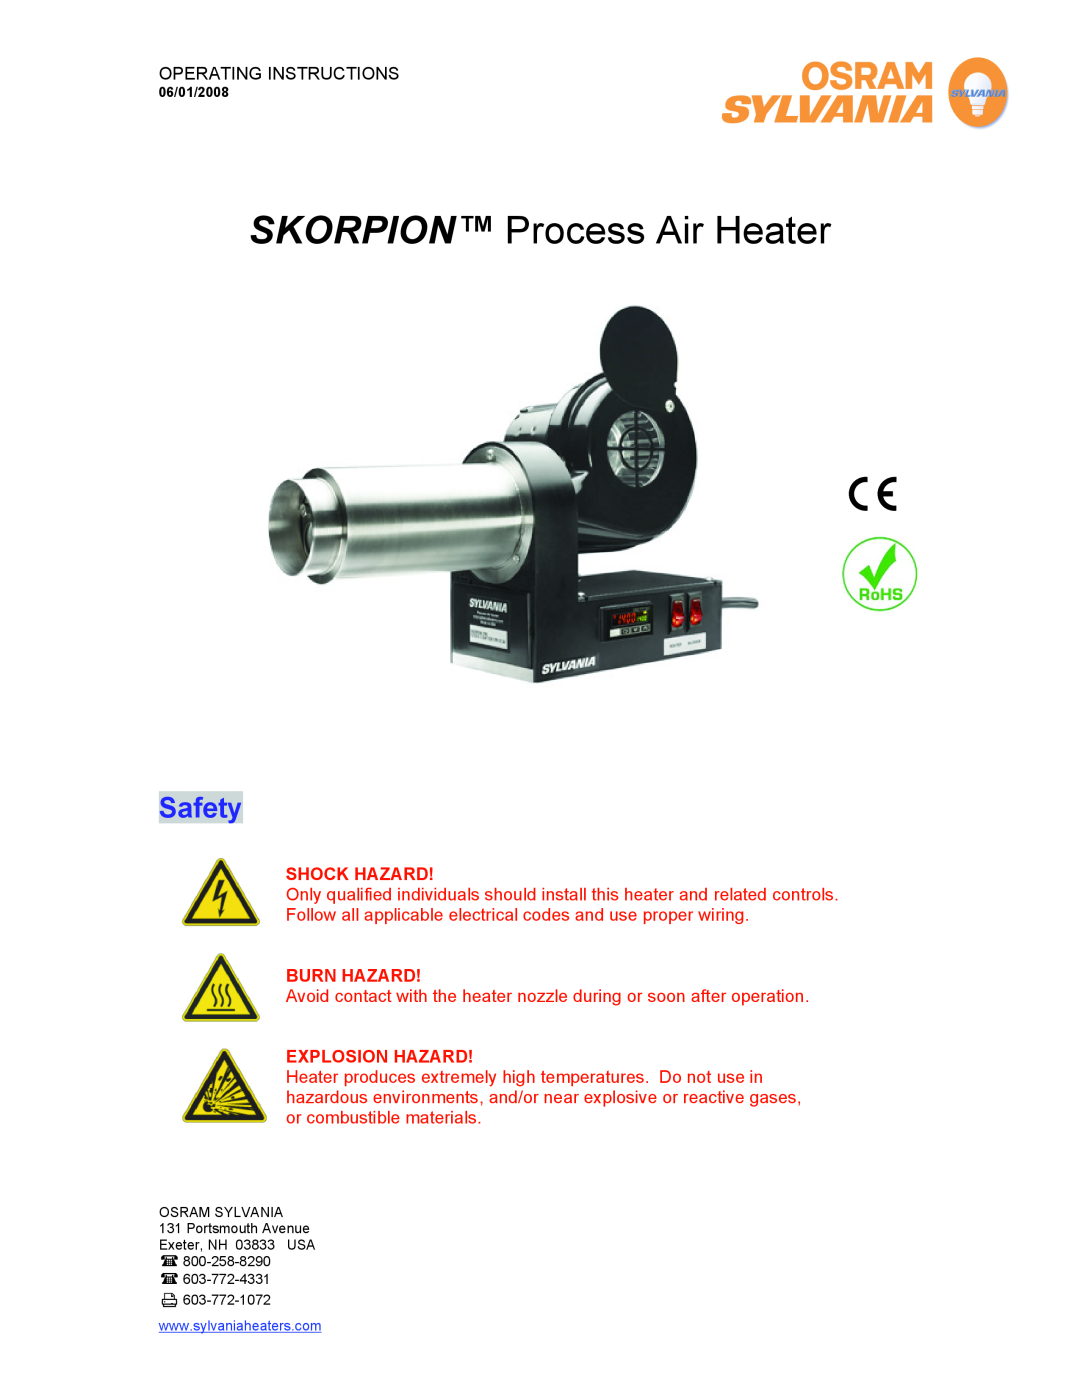 Sylvania F076008 operating instructions SKORPION Process Air Heater, Safety, Shock Hazard, Burn Hazard, Explosion Hazard 